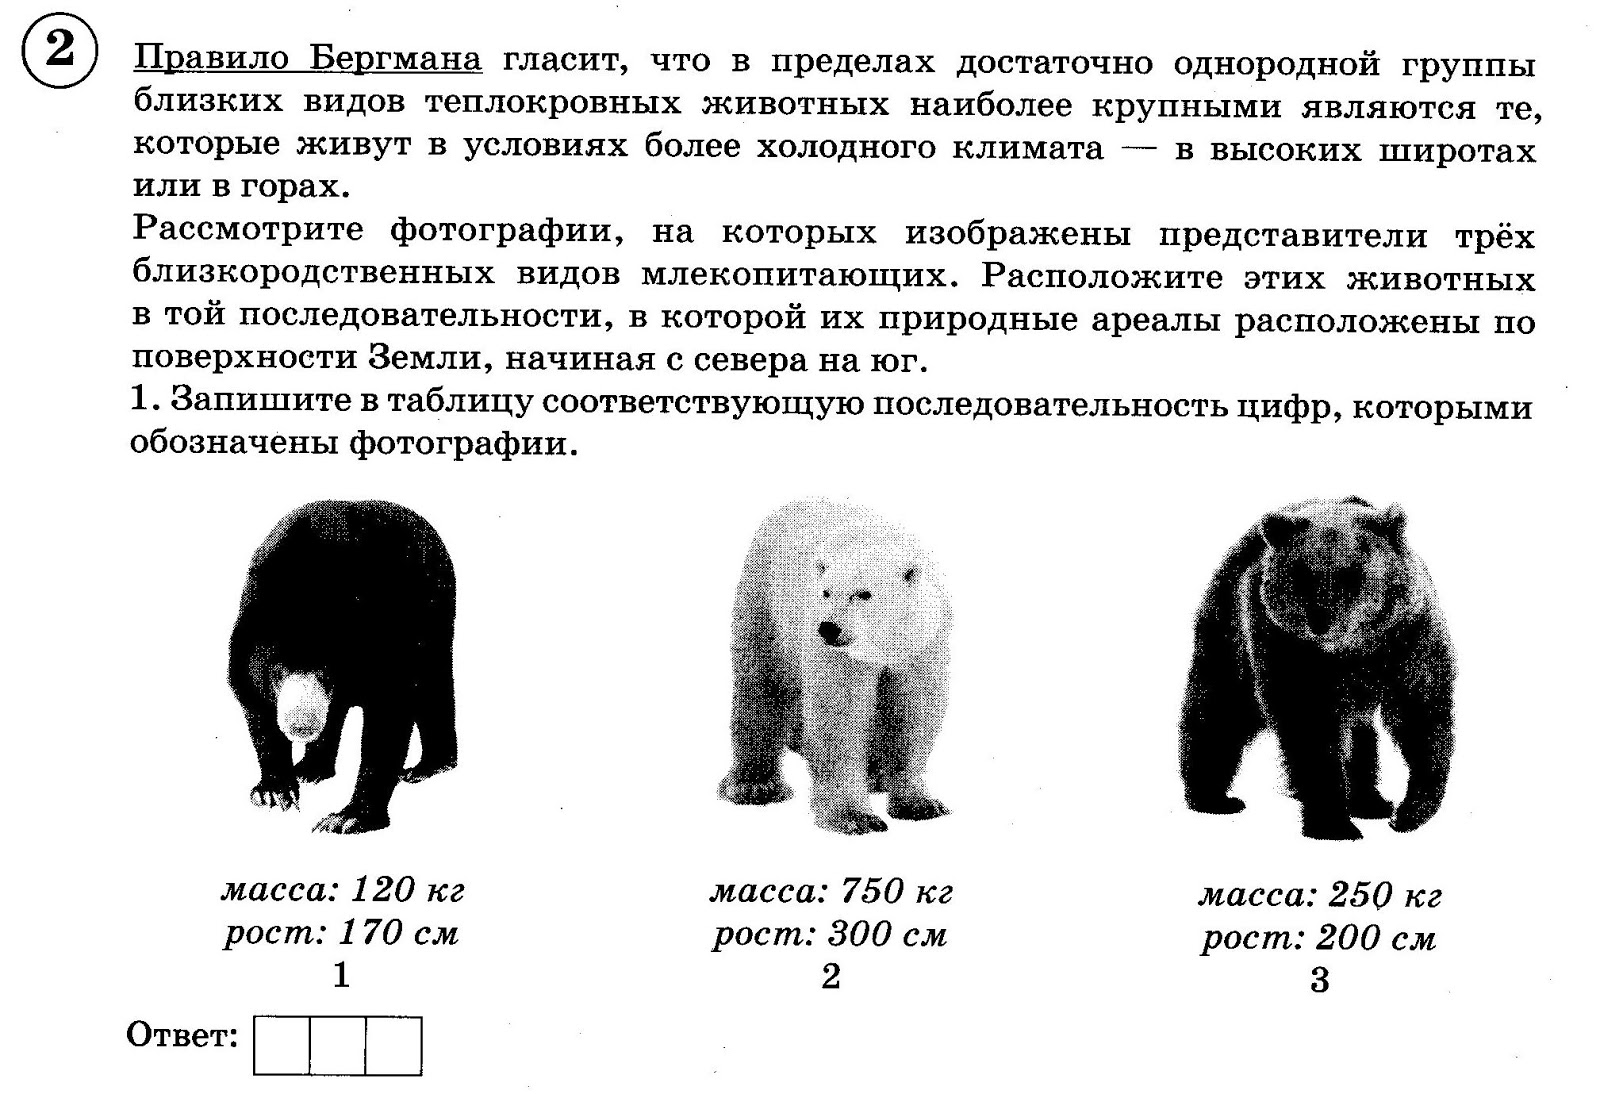 Бурый медведь порядок. Правило Бергмана медведи. Правило Бергмана (к.Бергман, 1847). Закон Аллена и Бергмана. Правило Аллена и Бергмана и Глогера.